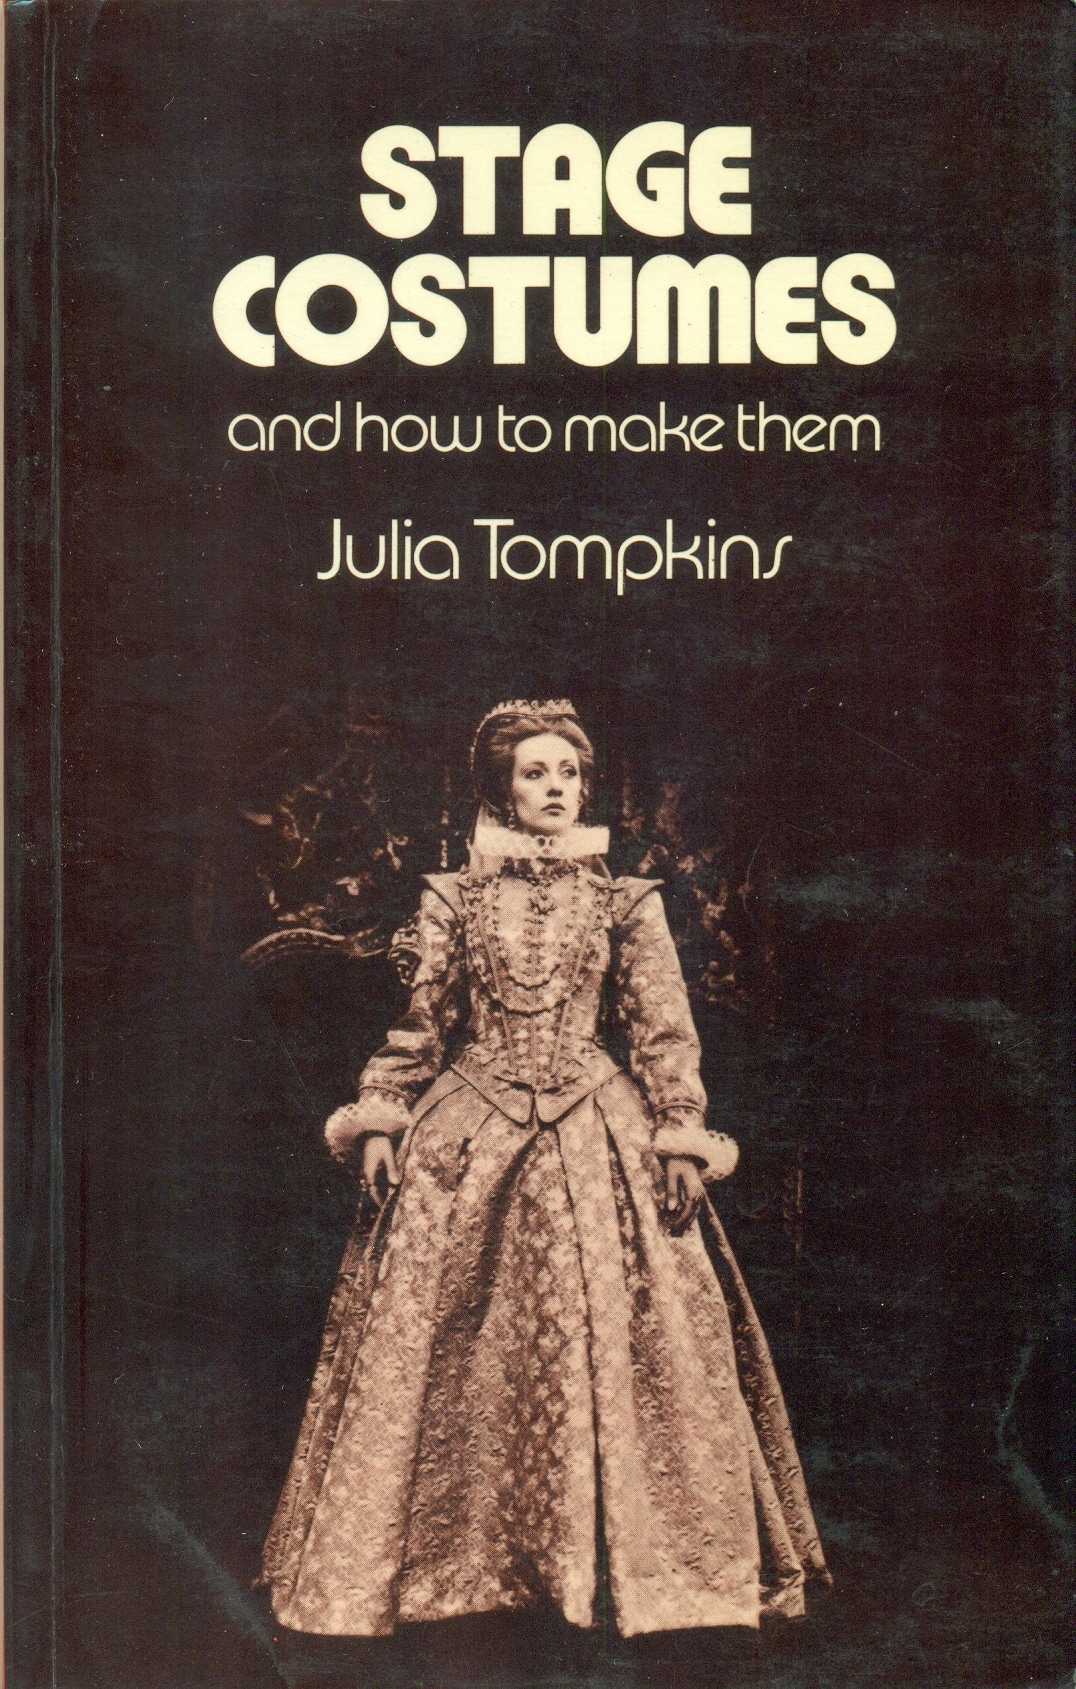 Stage costumes Julia Tompkins